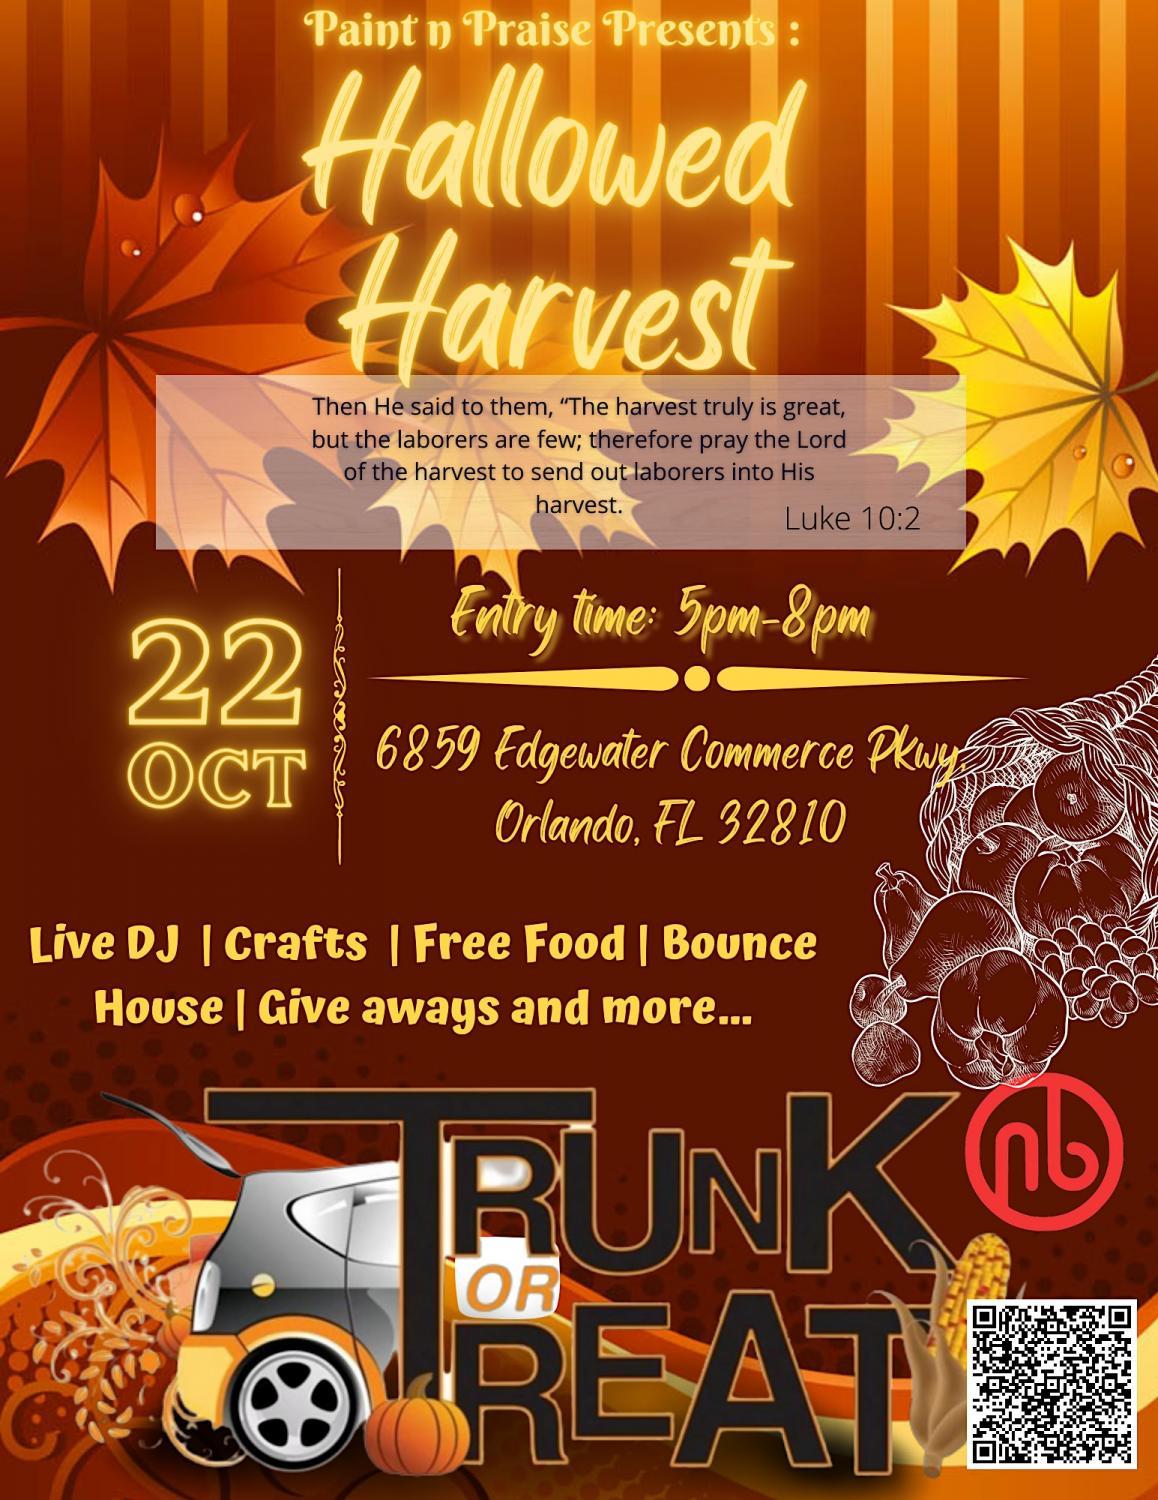 Hallowed Harvest
Sat Oct 22, 5:00 PM - Sat Oct 22, 8:00 PM
in 3 days